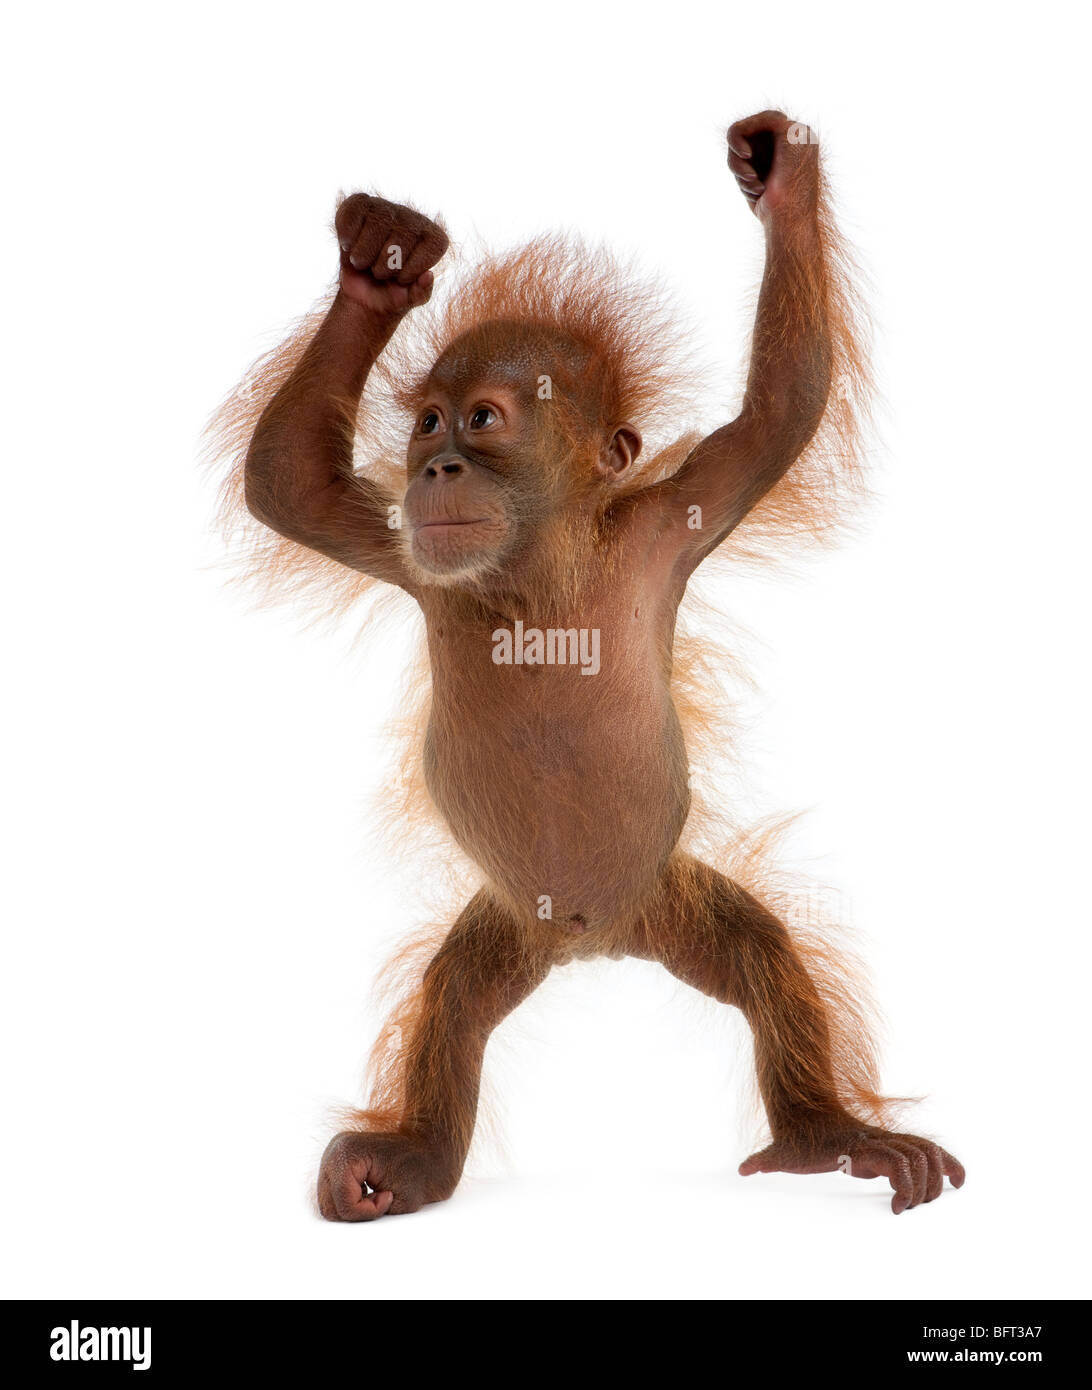 Baby Sumatran Orangutan, 4 months old, standing in front of white background Stock Photo